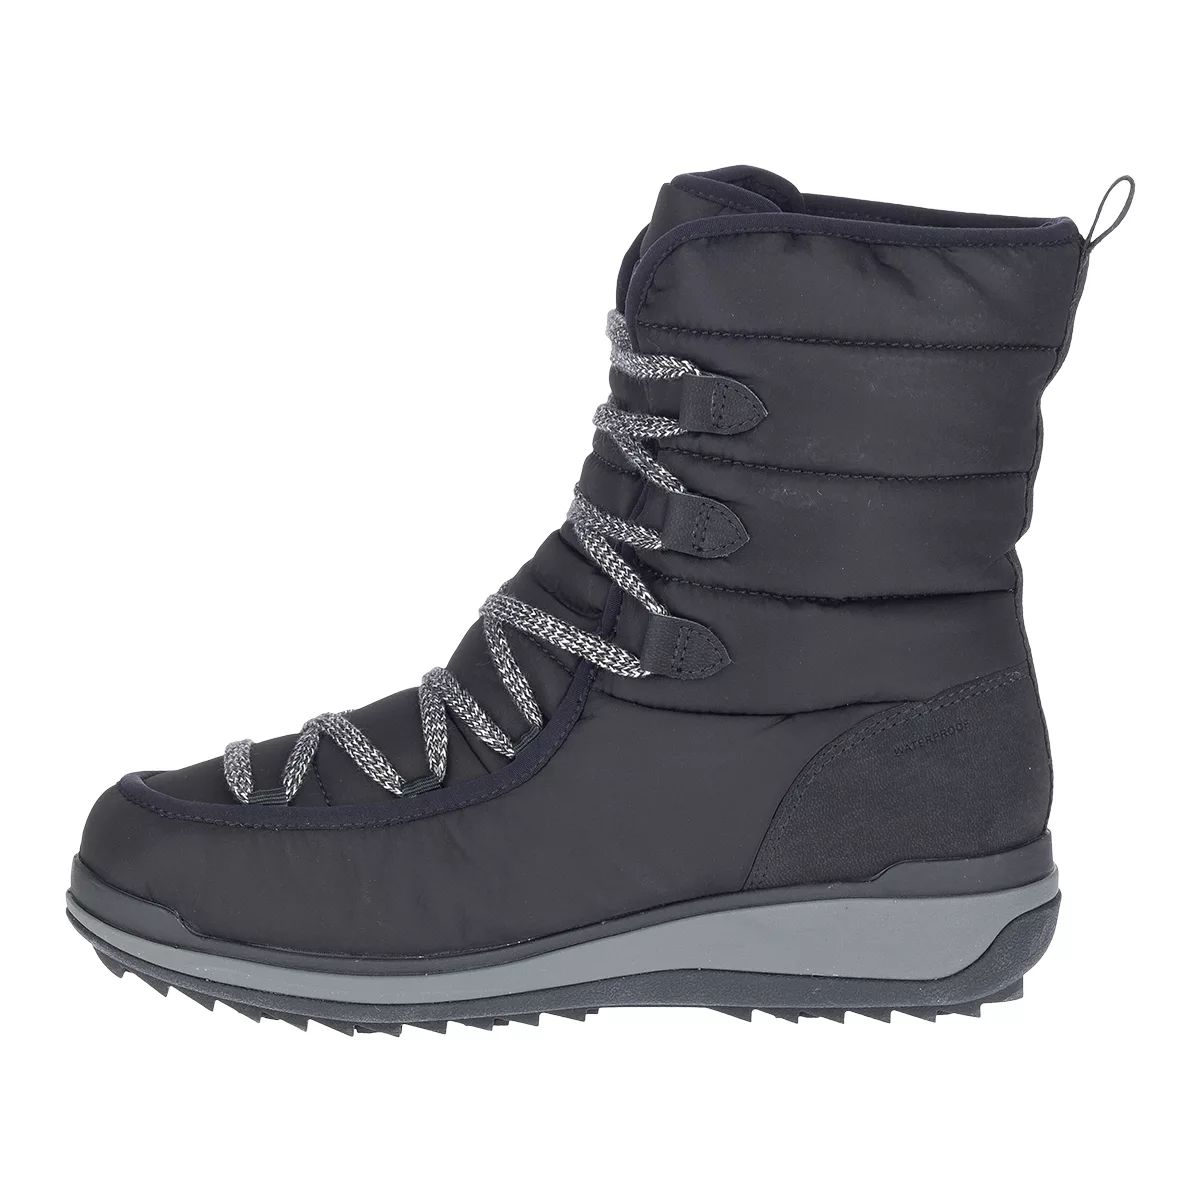 Merrell Womens Snowcreek Cozy Polar Waterproof Boots - Black